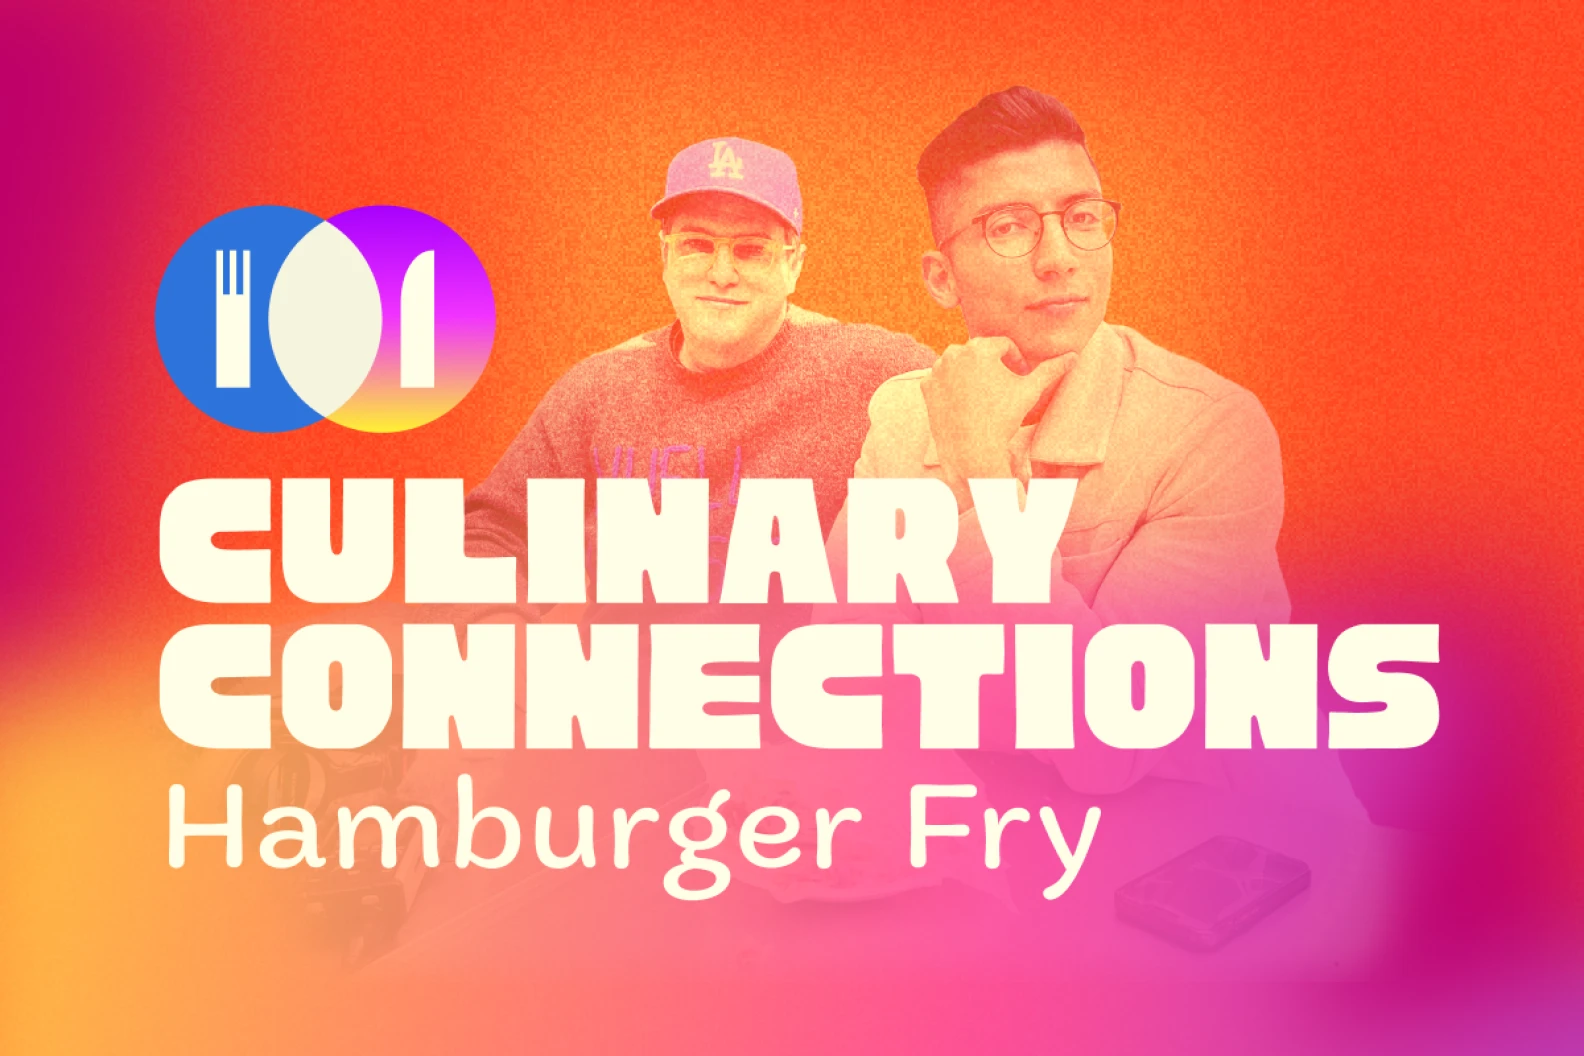 Culinary Connections Hamburger Fry promo image